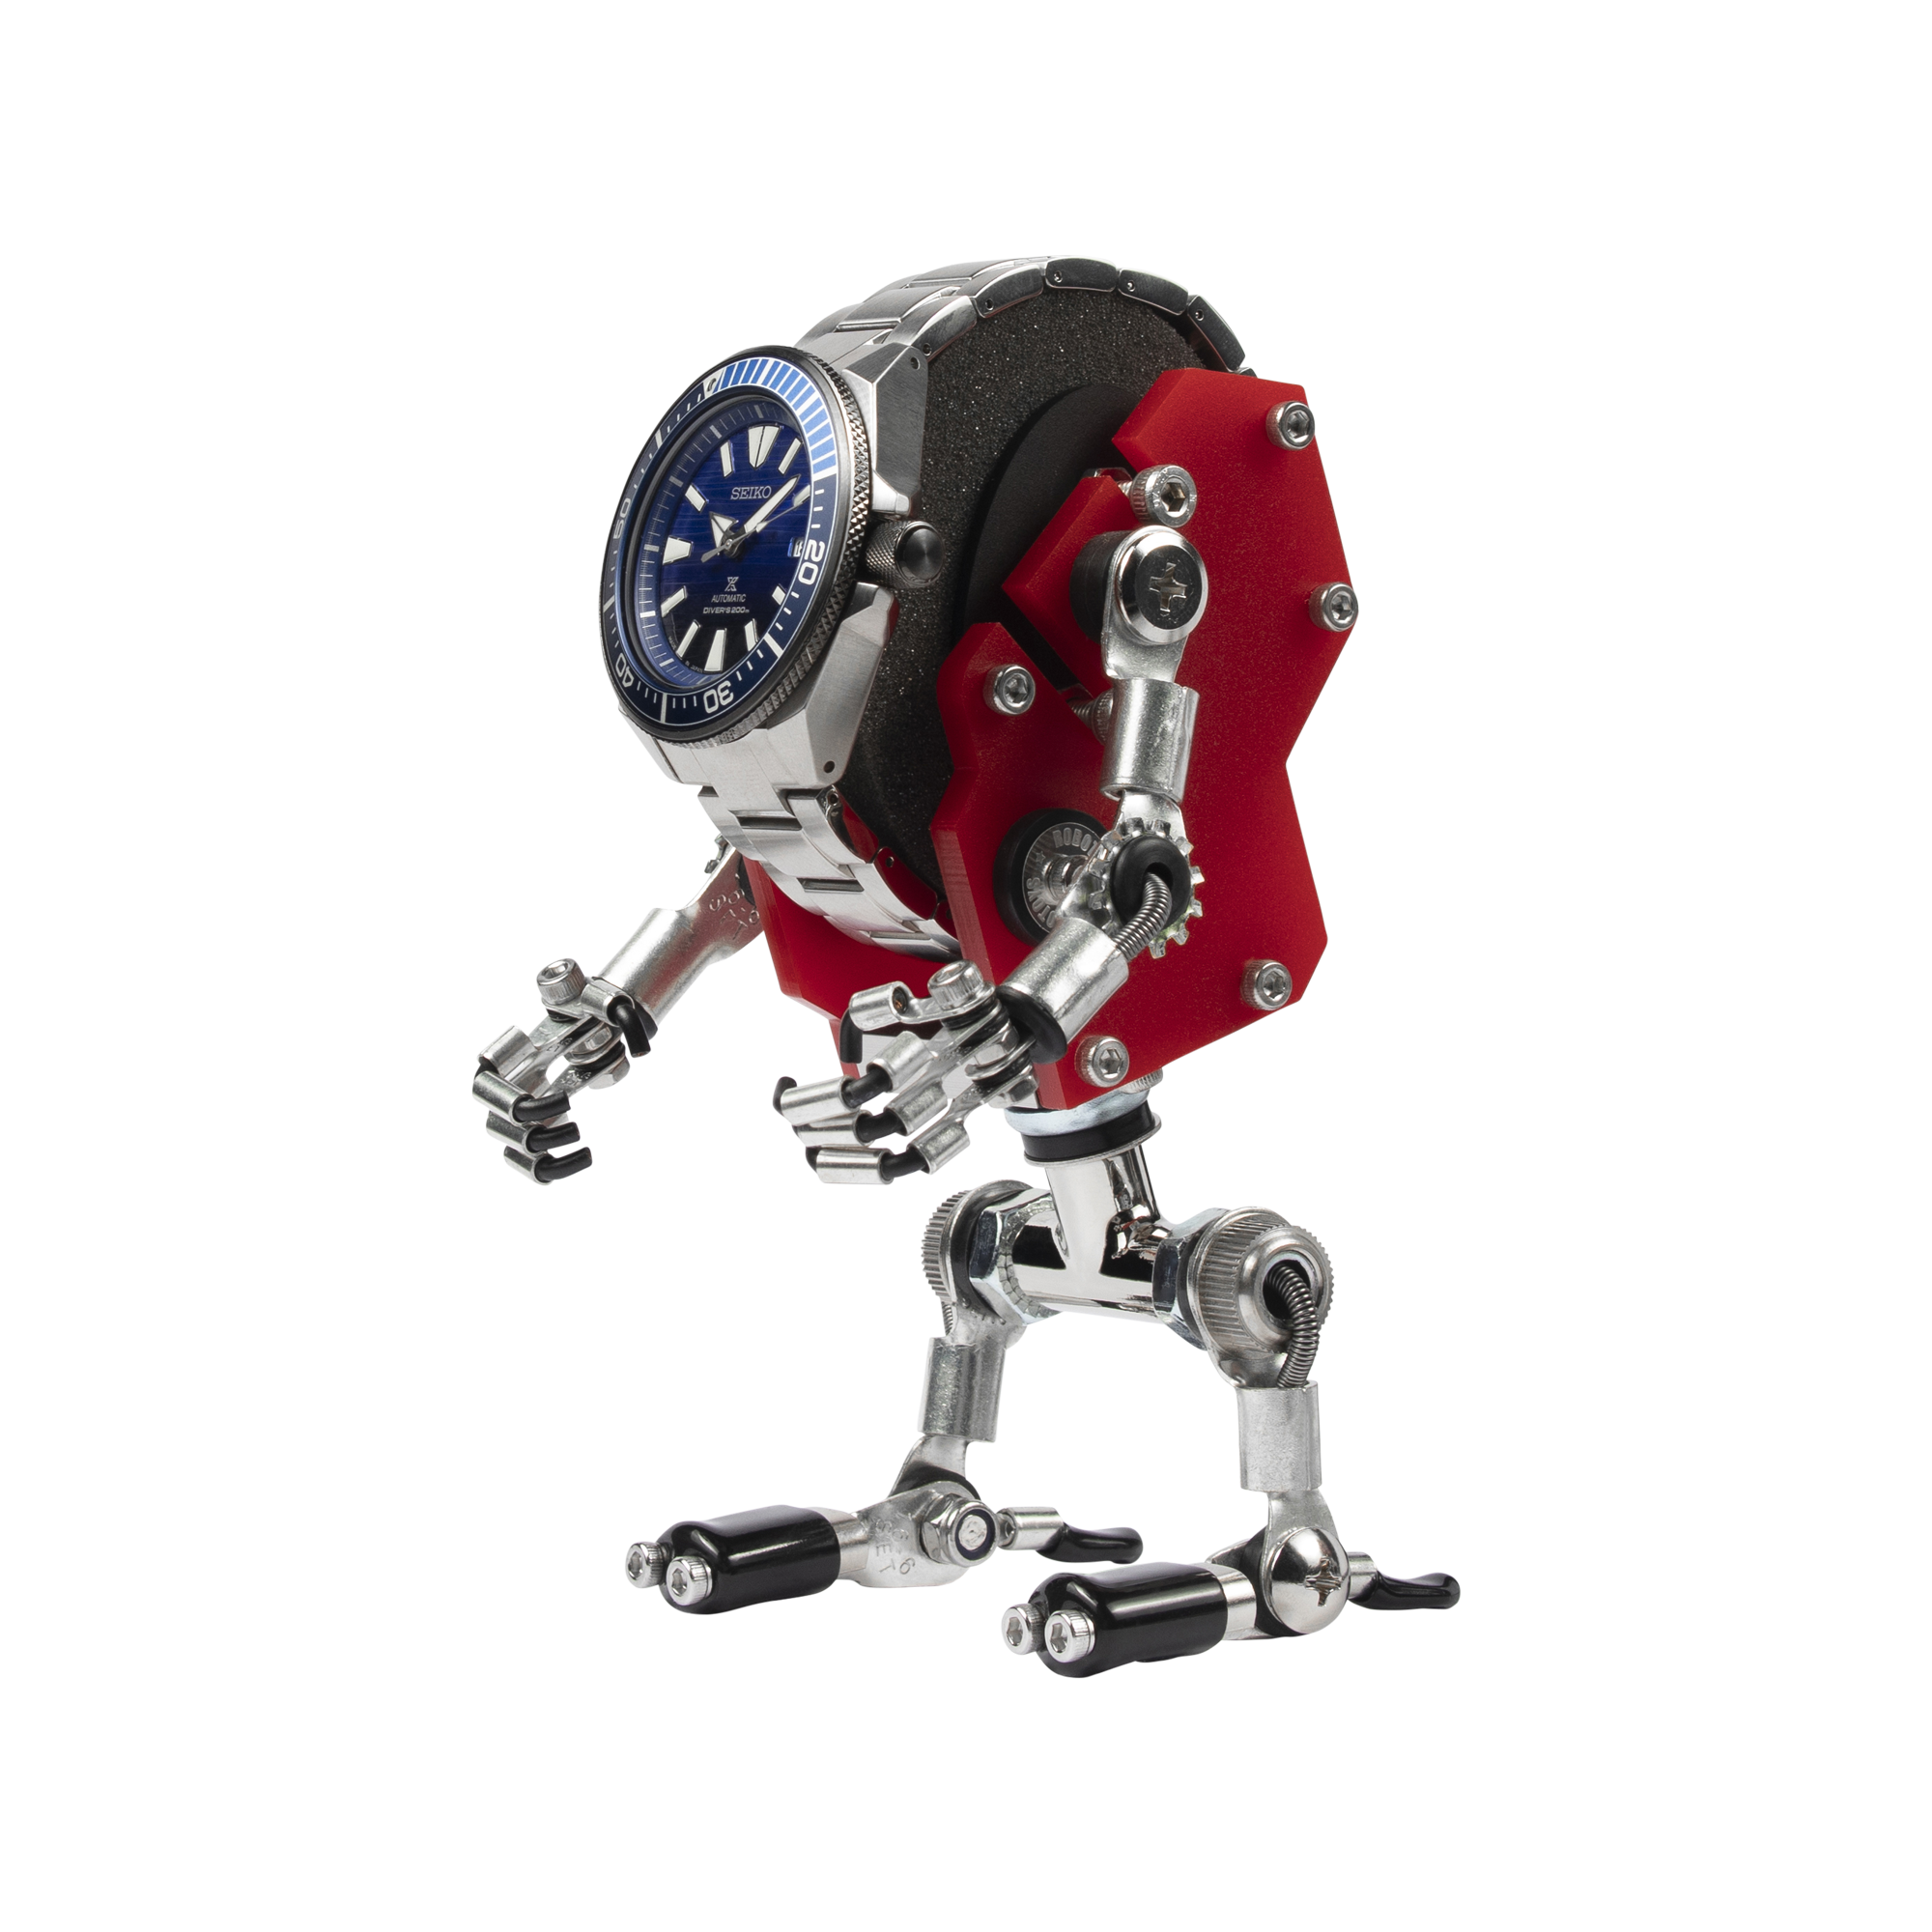 [RoboToys] Watch Stand - MiniMech - Red